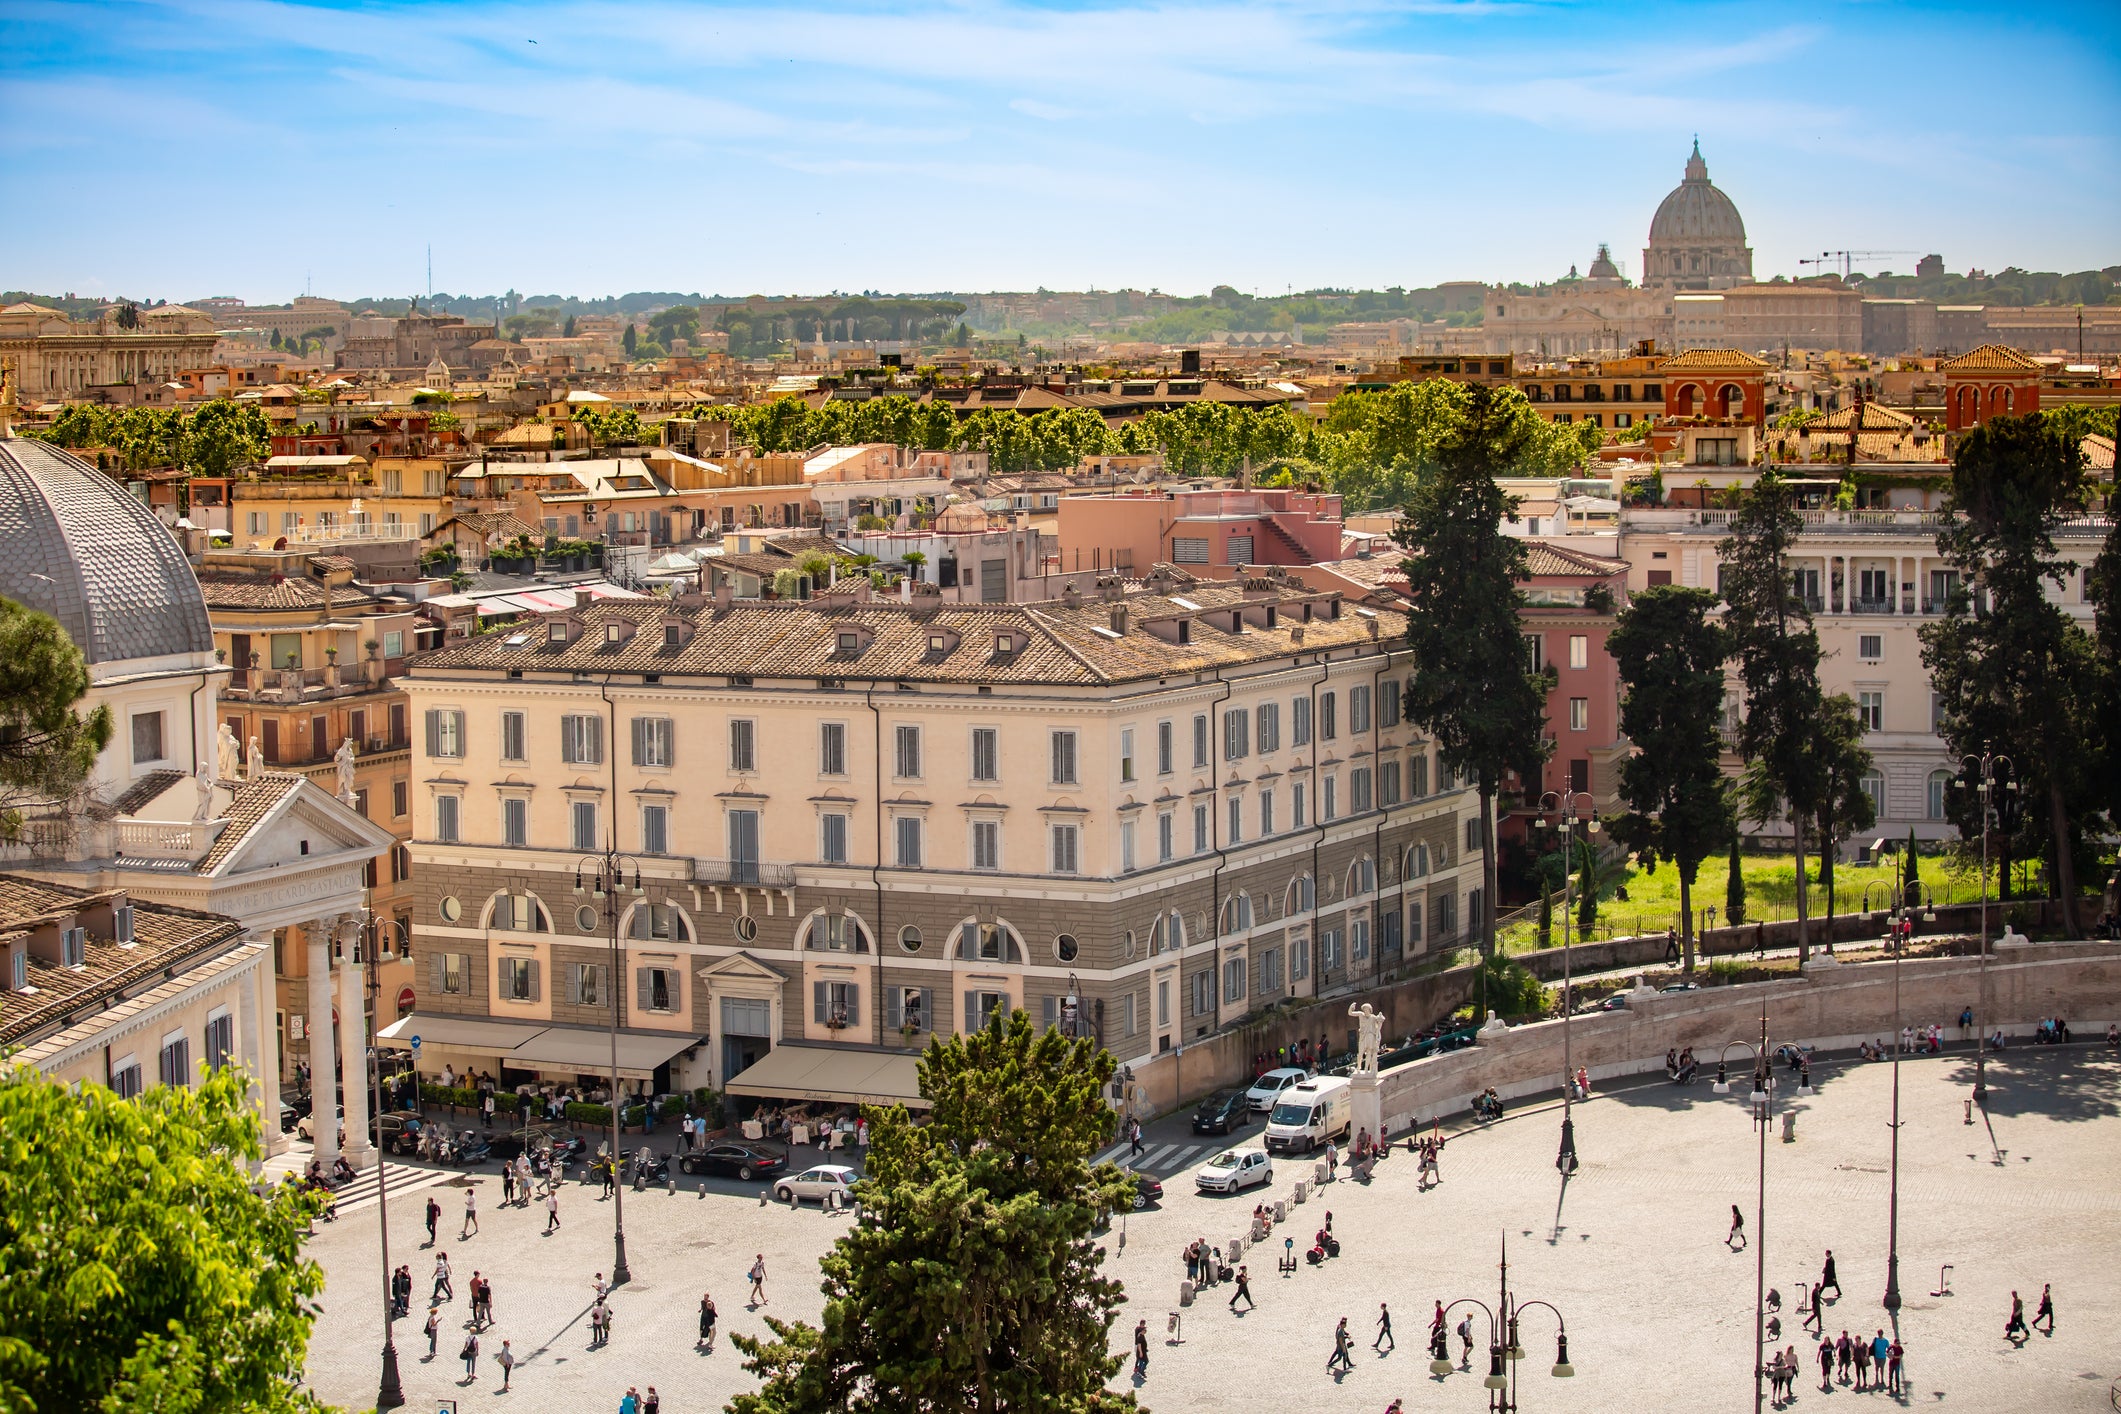 For a splendid view of Piazza del Popolo visit the formal Pincio Gardens